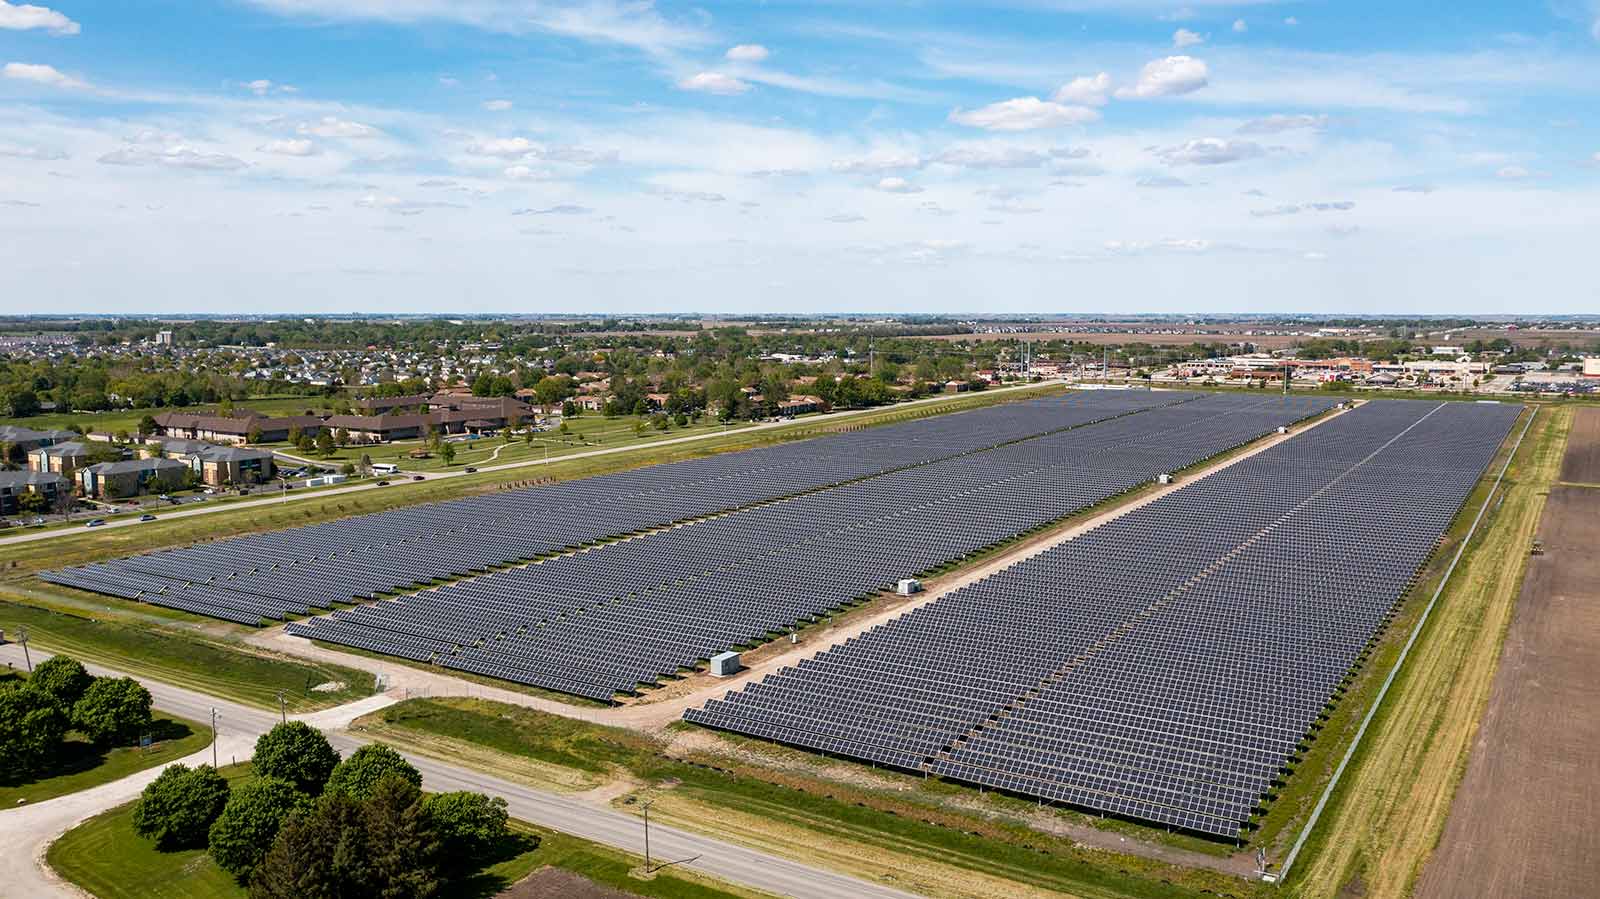 view one of the University of Illinois Solar Farm